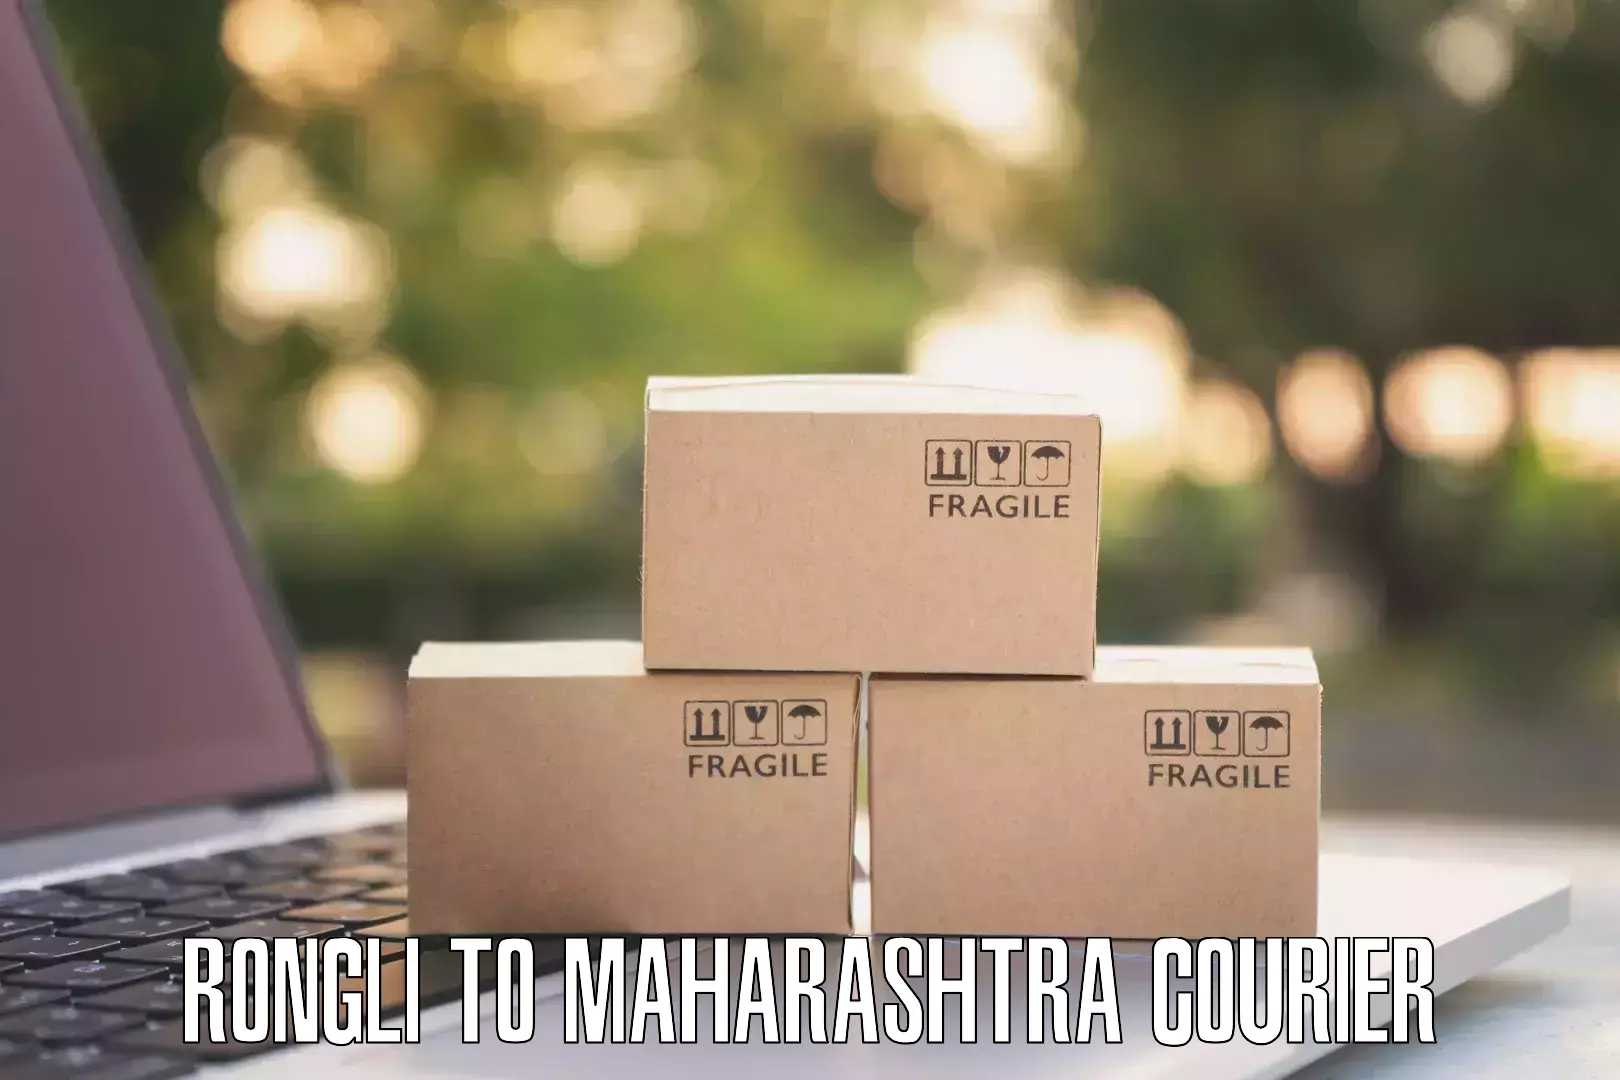 Efficient order fulfillment Rongli to Maharashtra